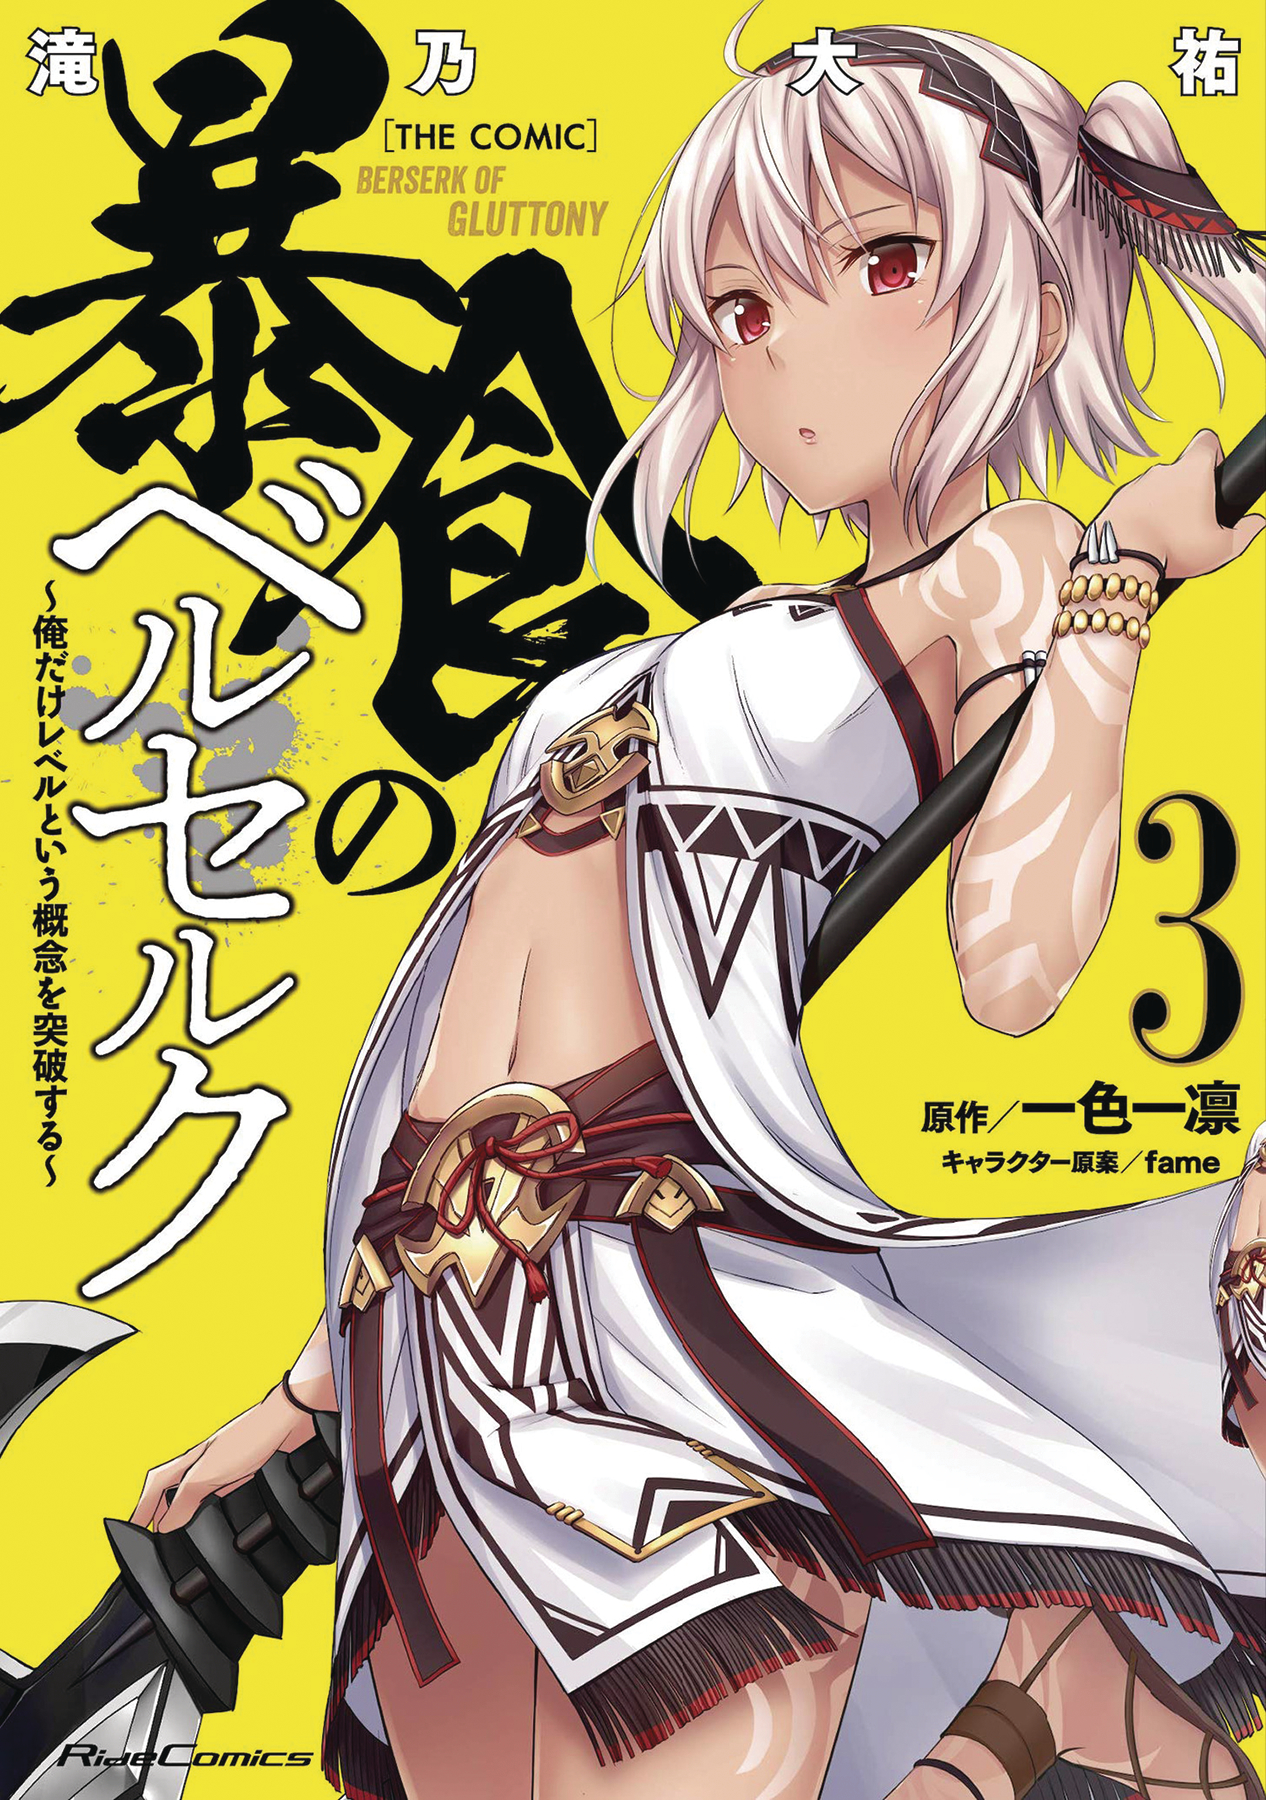 Buy Berserk of Gluttony Manga Volume 3